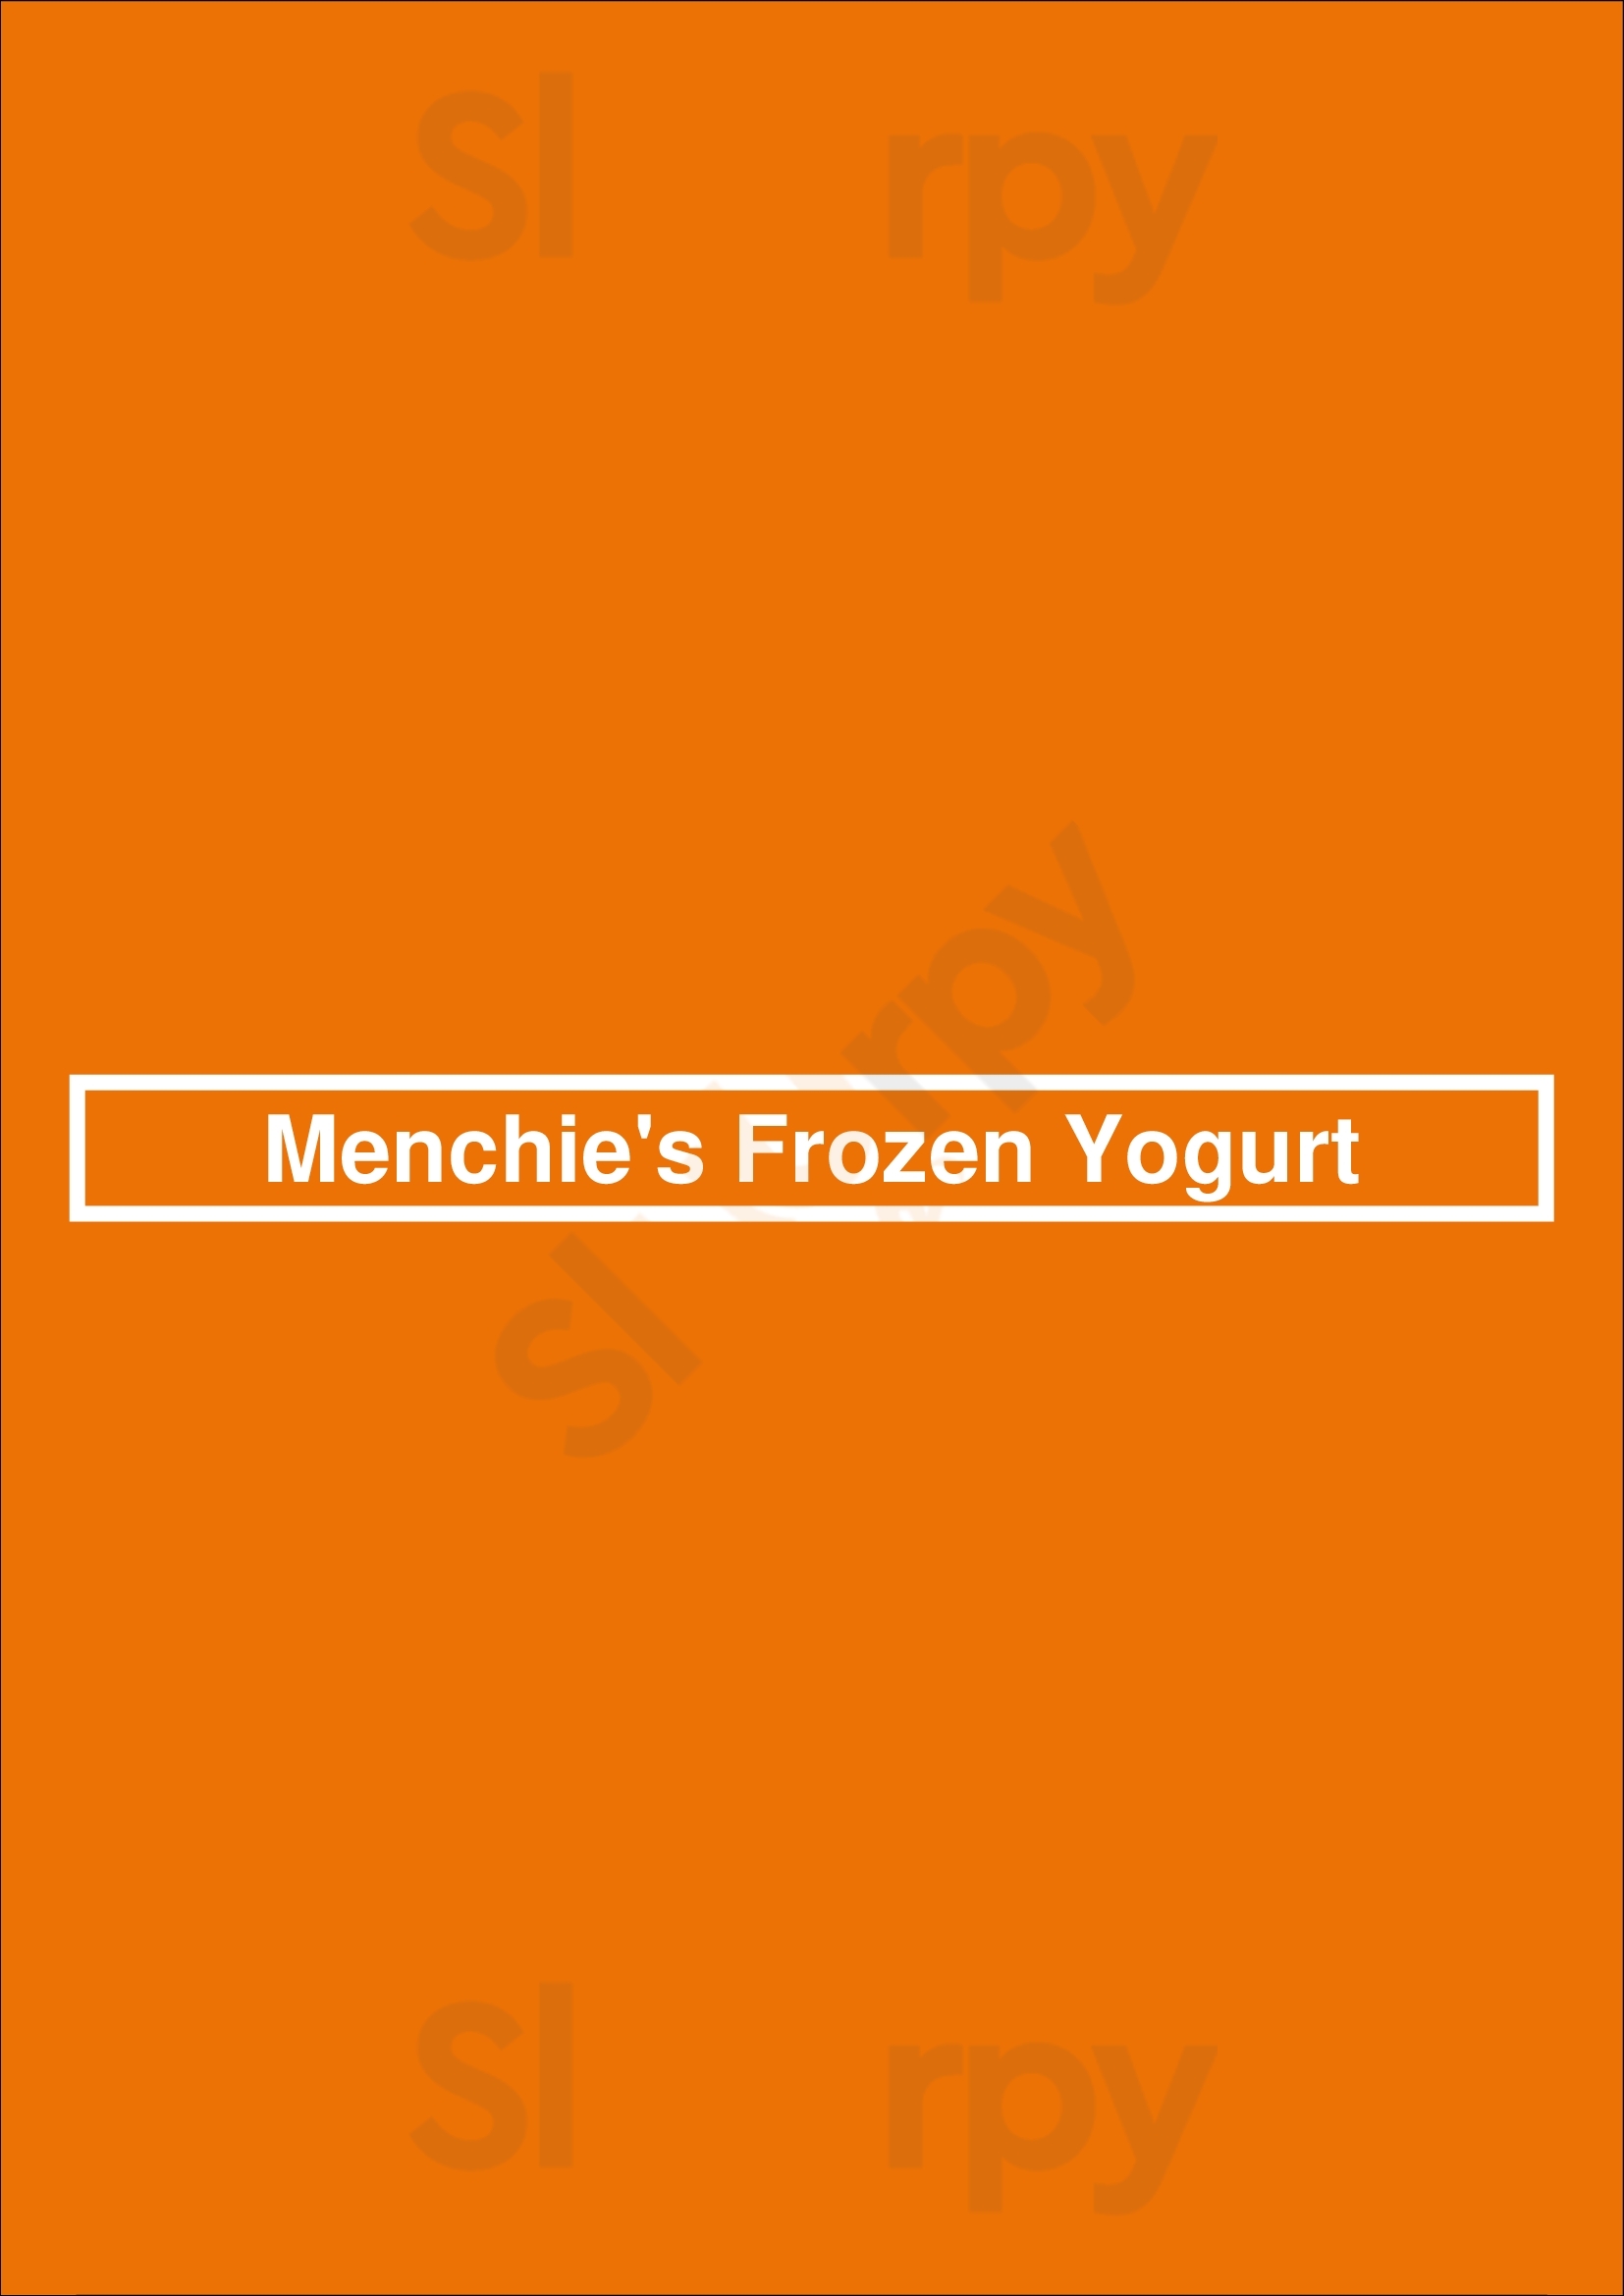 Menchie's Frozen Yogurt Los Angeles Menu - 1